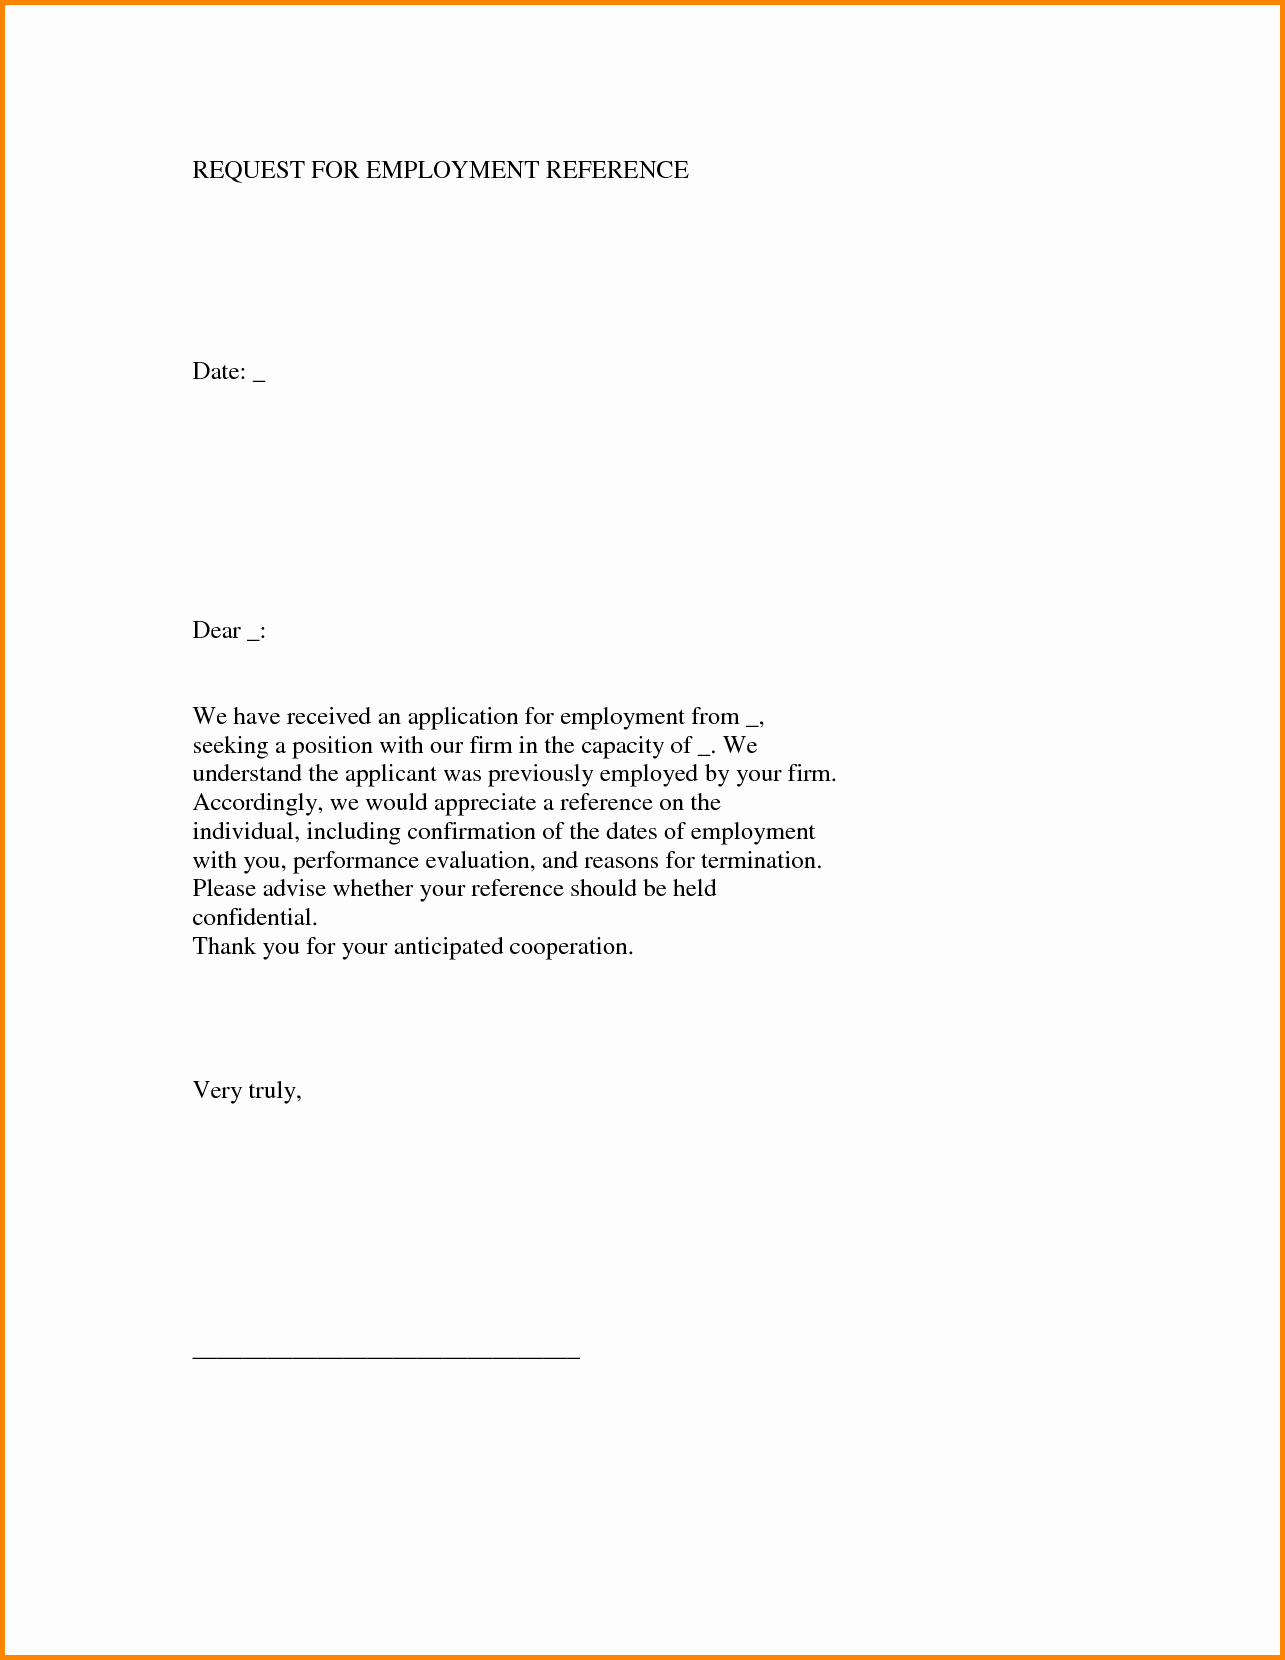 Sample Of Employment Reference Letter Elegant Employment Reference Template Portablegasgrillweber